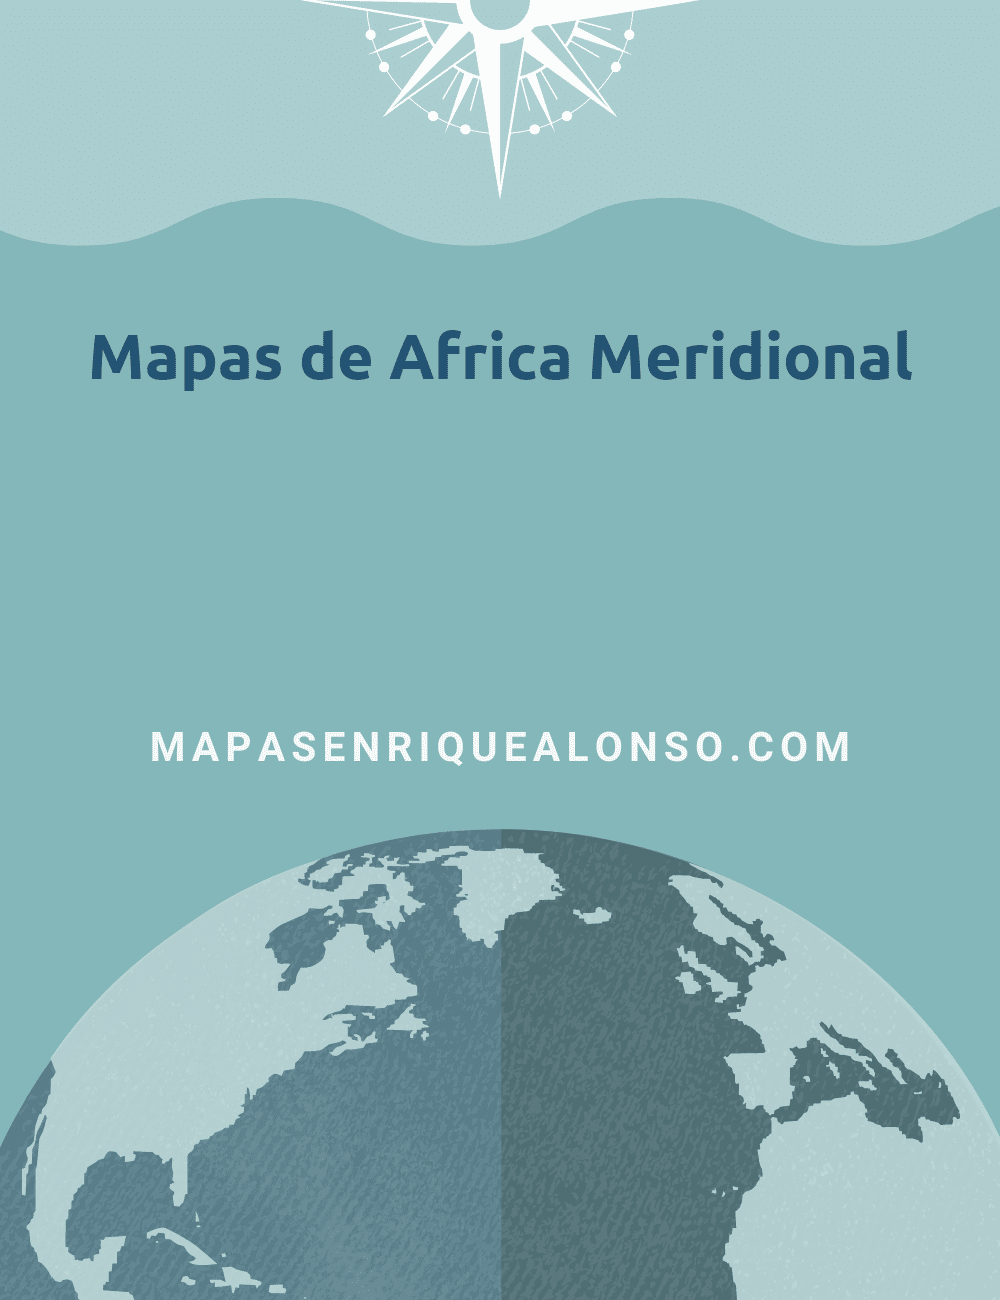 Mapas de Africa Meridional